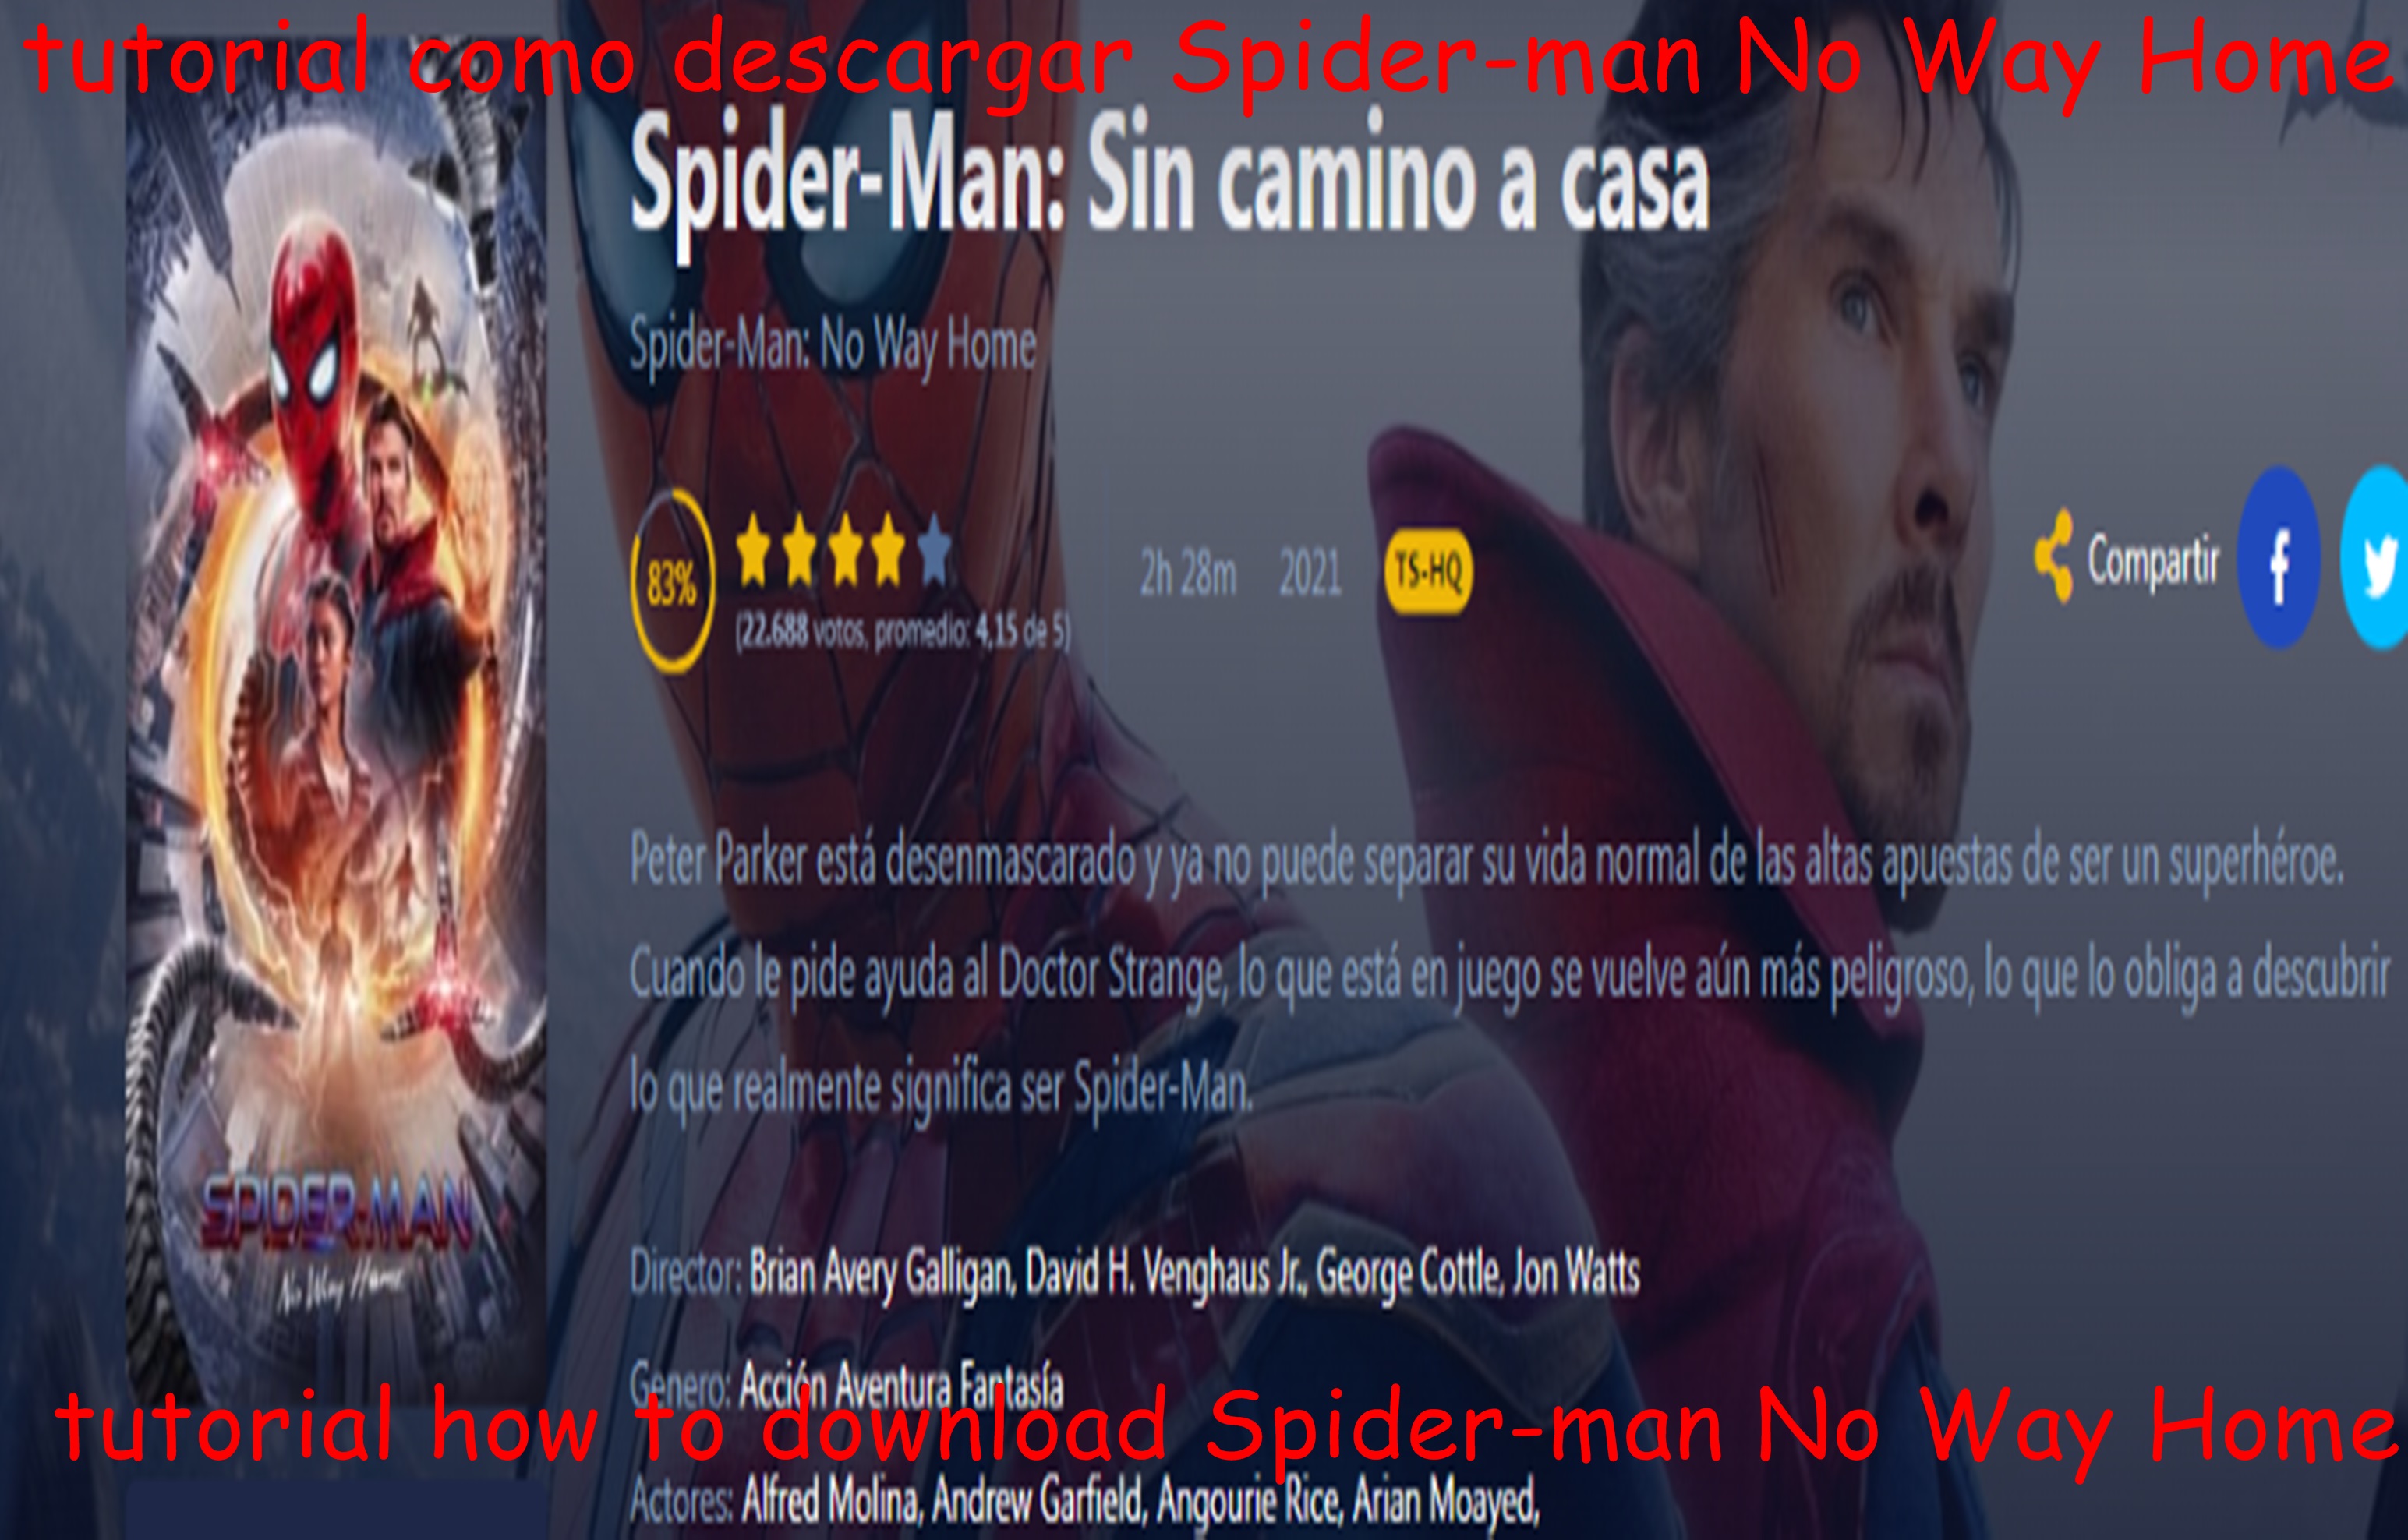 ESP]-[ENG] Tutorial como descargar Spider-man No Way Home totalmente  gratiss|Tutorial how to download Spider-man No Way Home totally for free -  CineTV